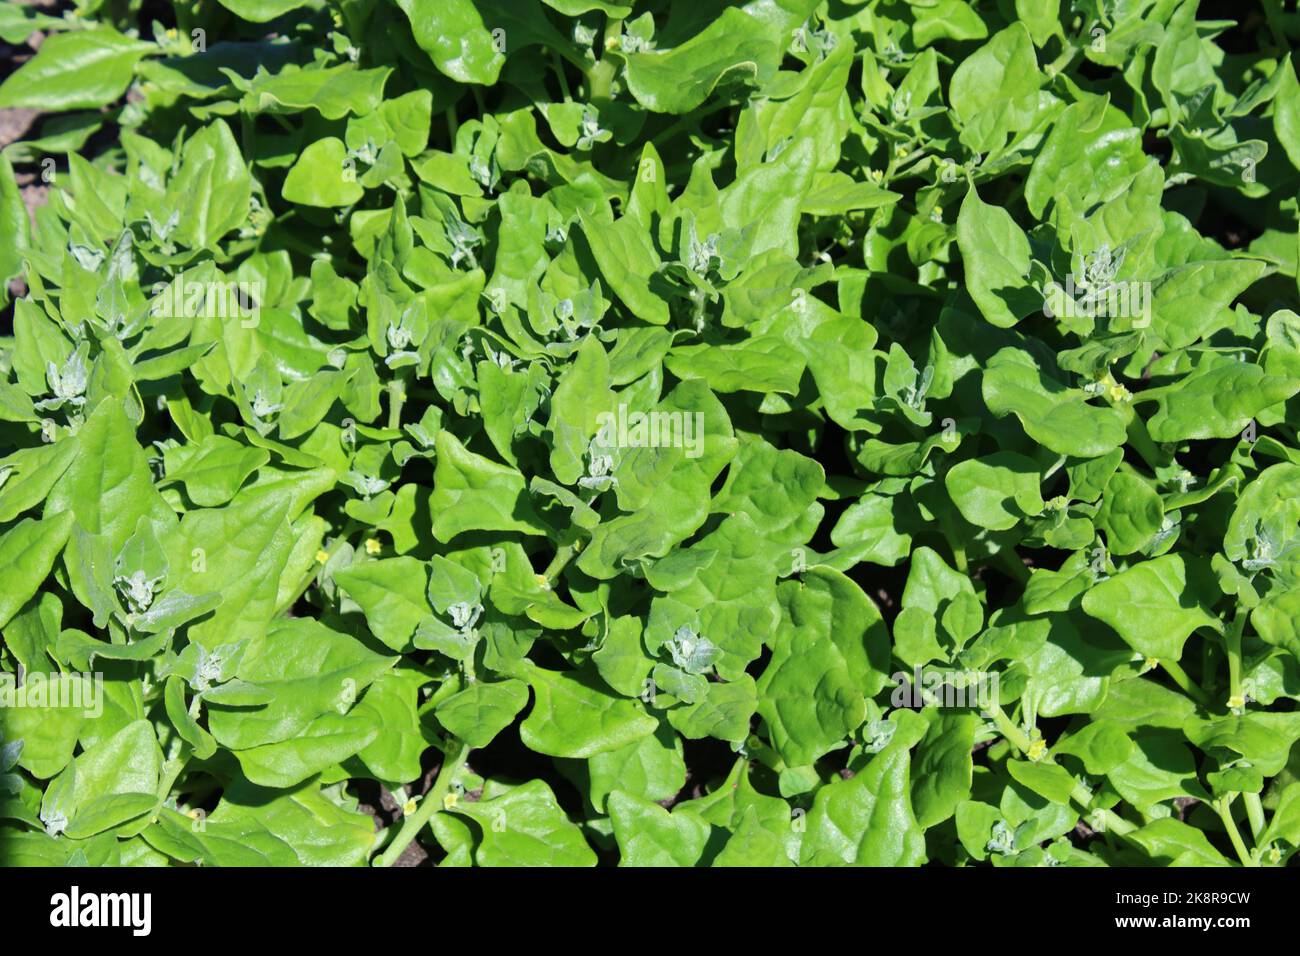 New Zealand spinach (Tetragonia tetragonioides) in kitchen garden. Stock Photo